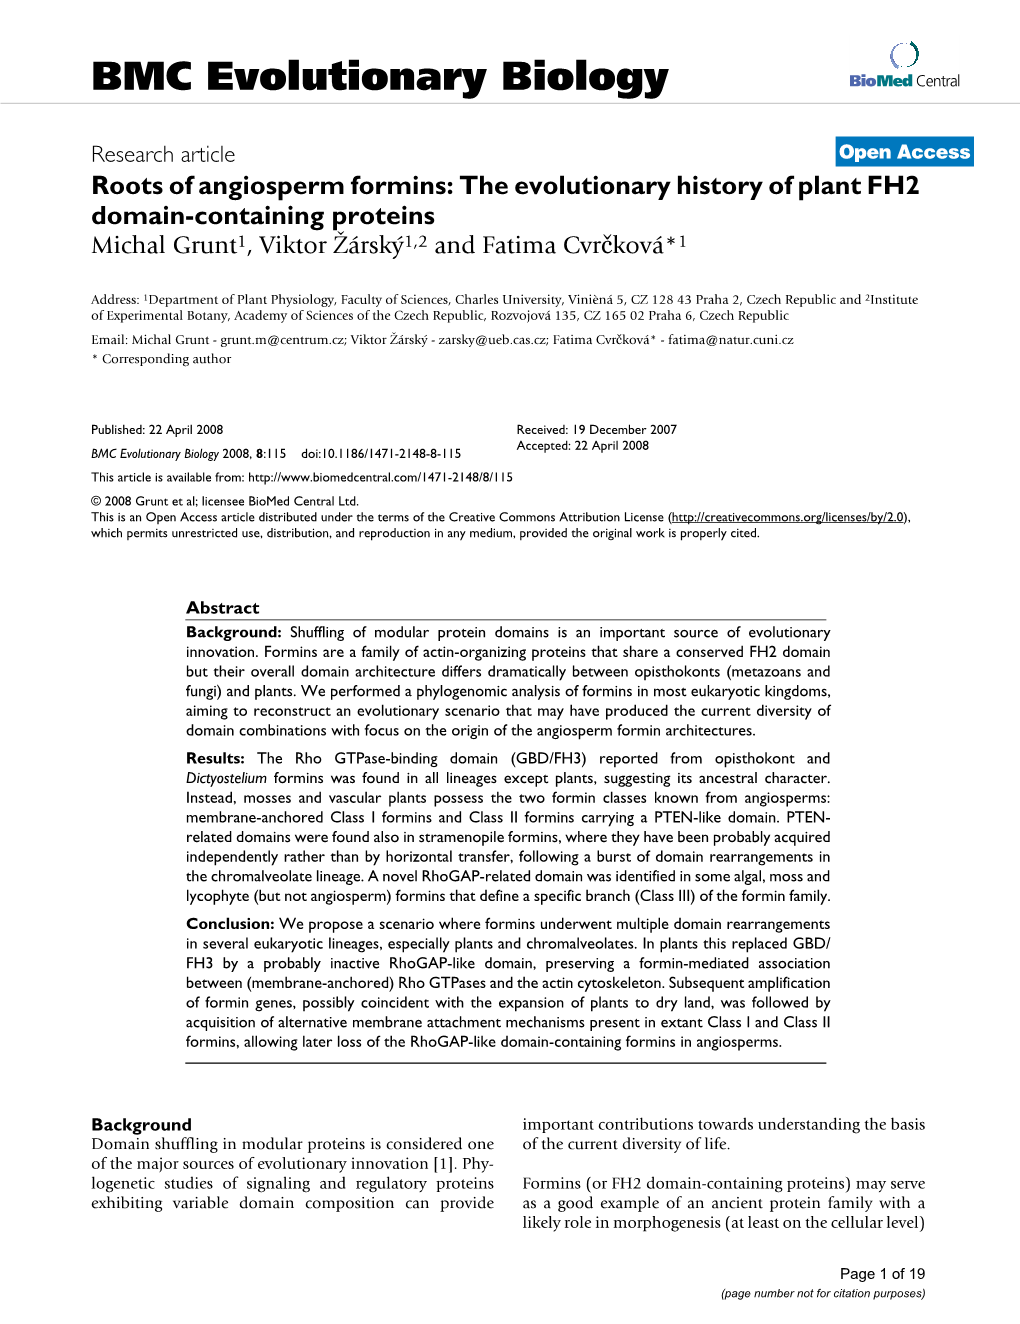 Roots of Angiosperm Formins: the Evolutionary History of Plant FH2 Domain-Containing Proteins Michal Grunt1, Viktor Žárský1,2 and Fatima Cvrčková*1